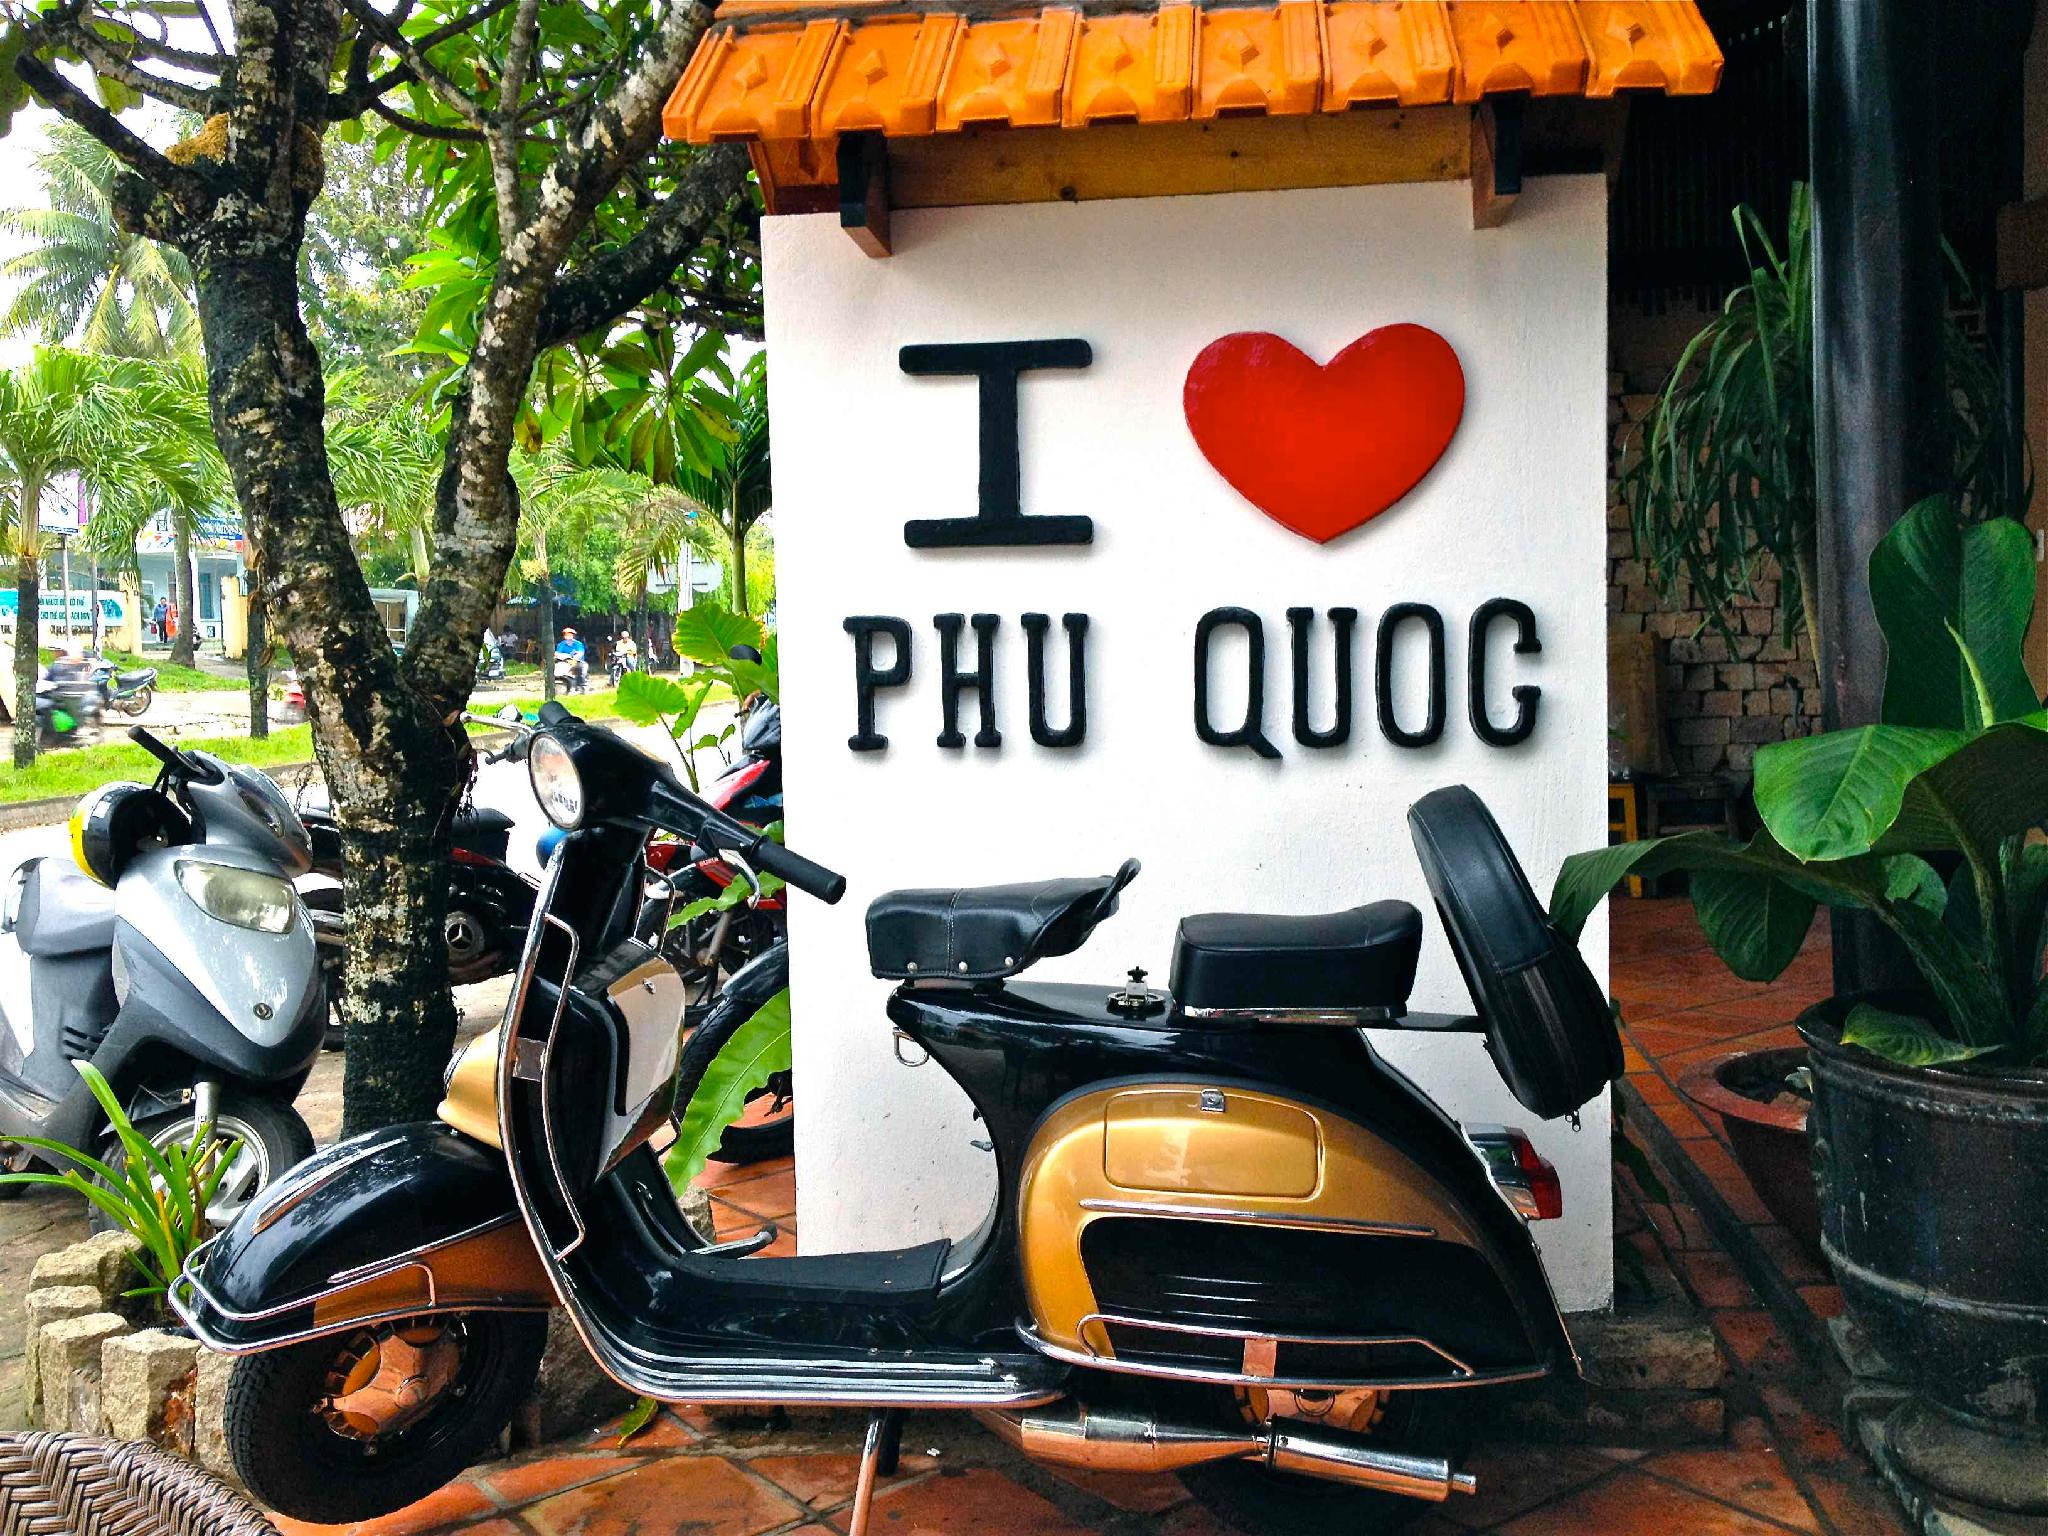 The Safari Phu Quoc House